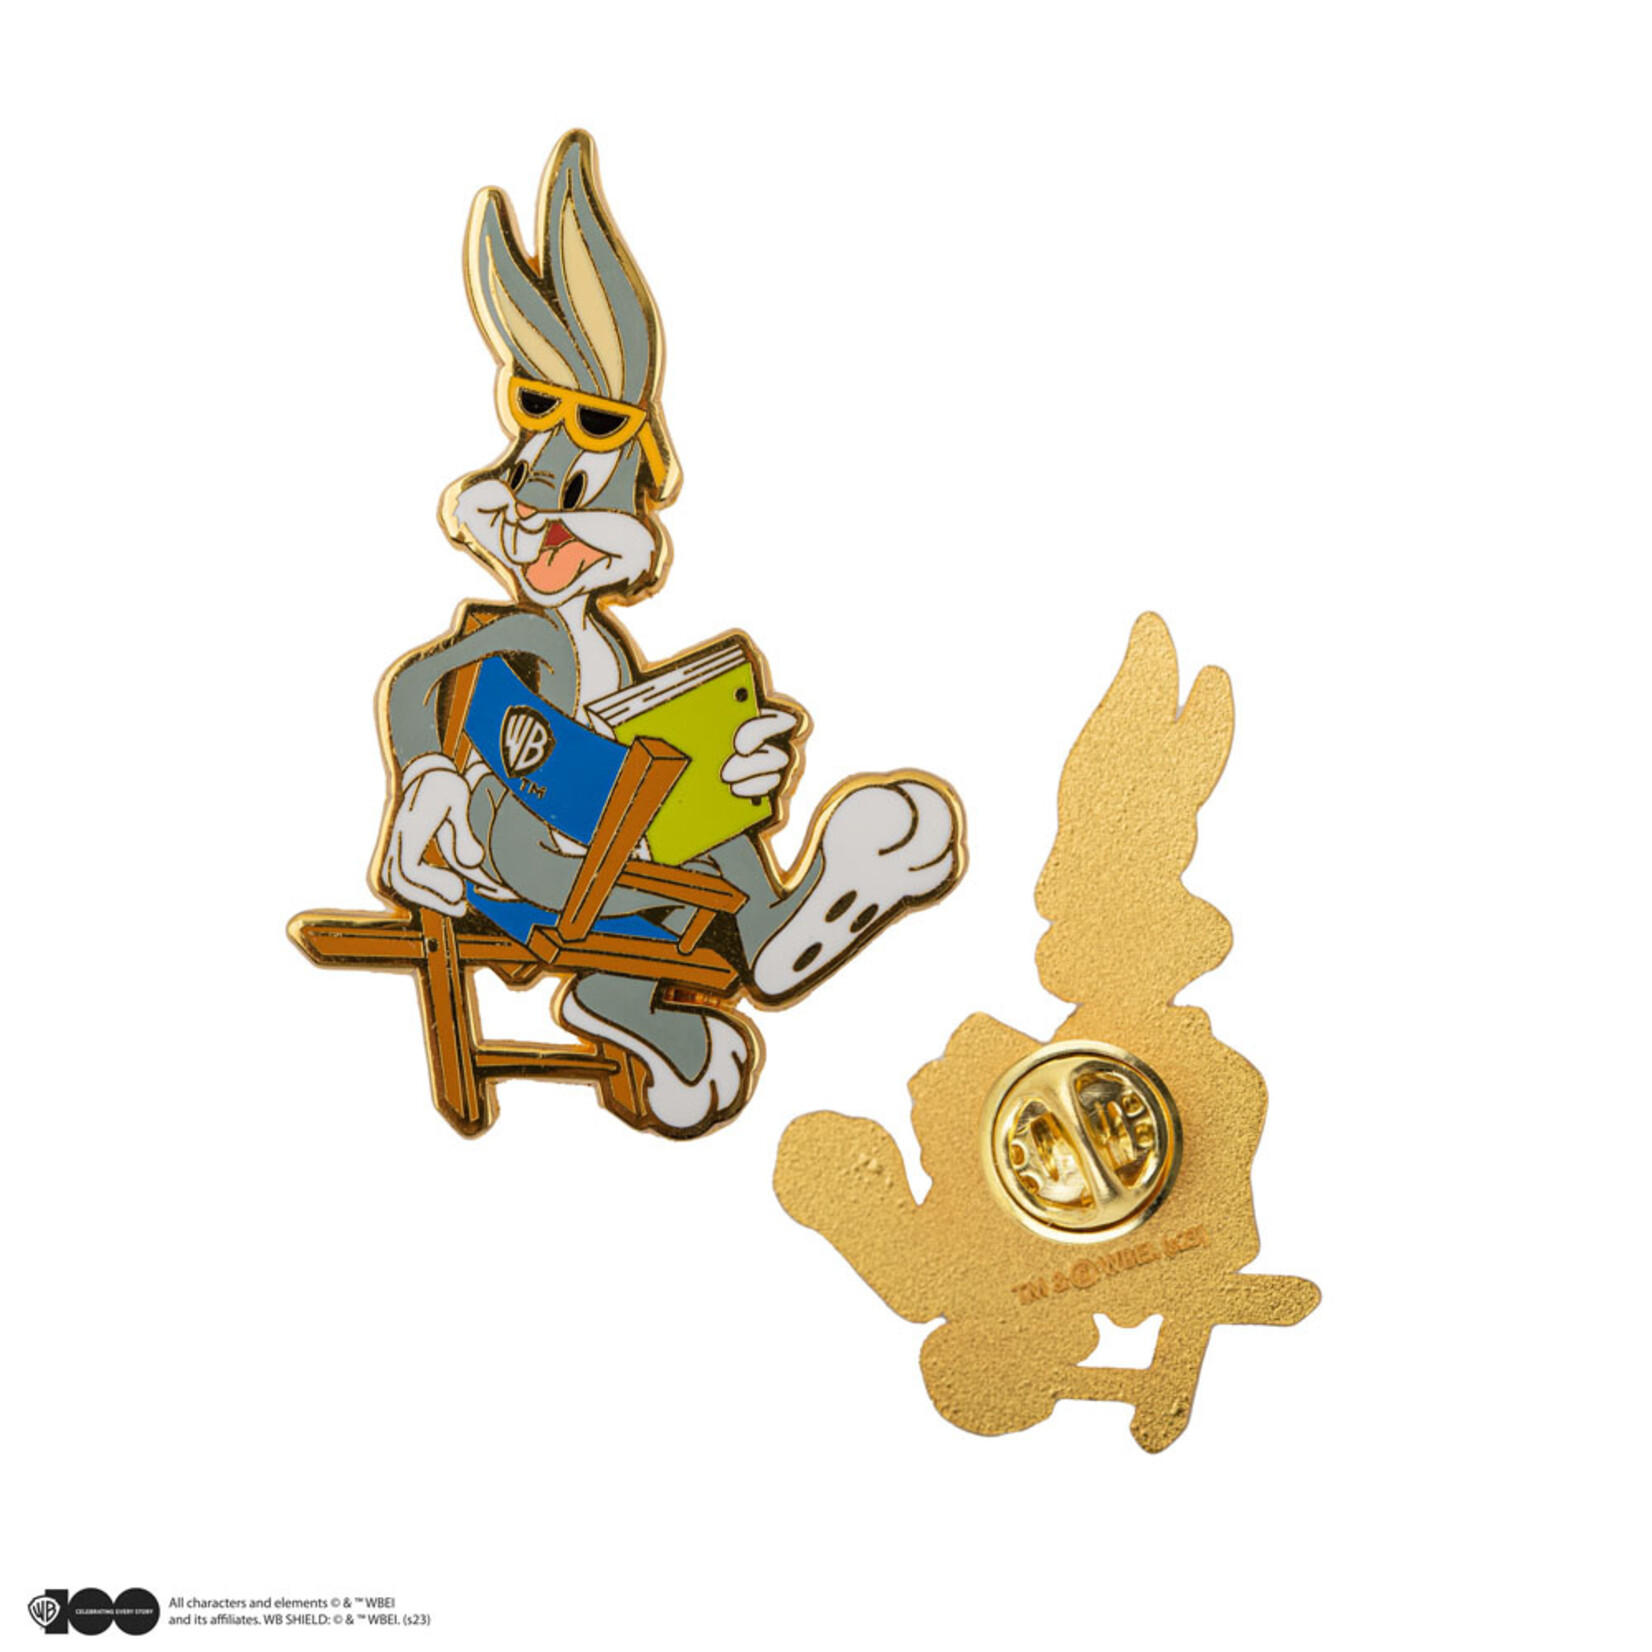 Cinereplicas Cinereplicas Looney Tunes Pins 2-Pack Bugs Bunny and Daffy Duck at Warner Bros Studio